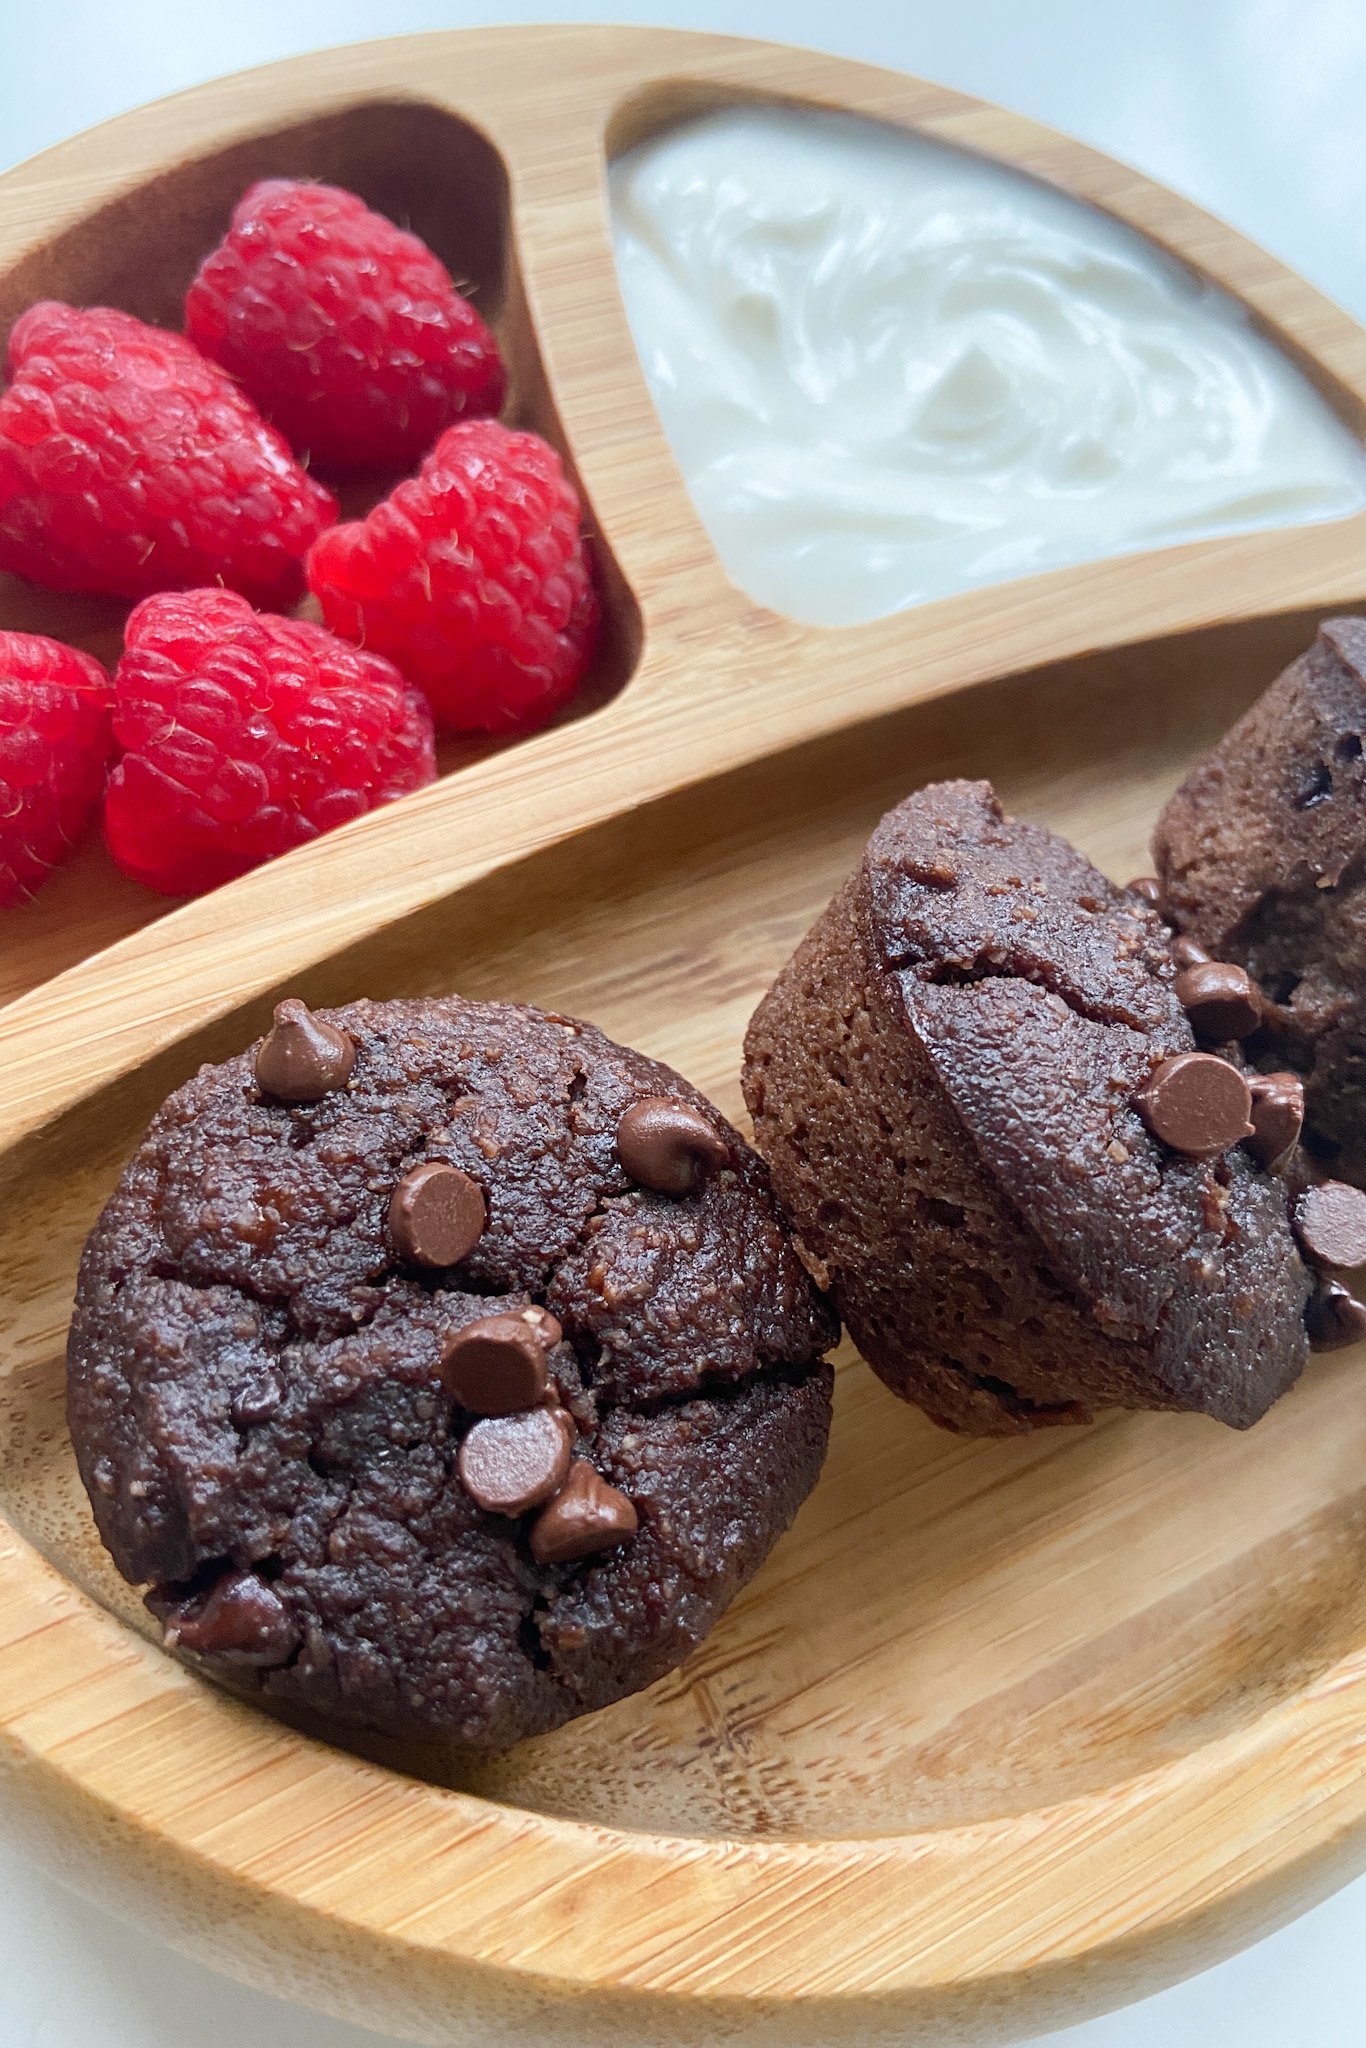 Mini double chocolate banana muffins served with raspberries and yogurt.